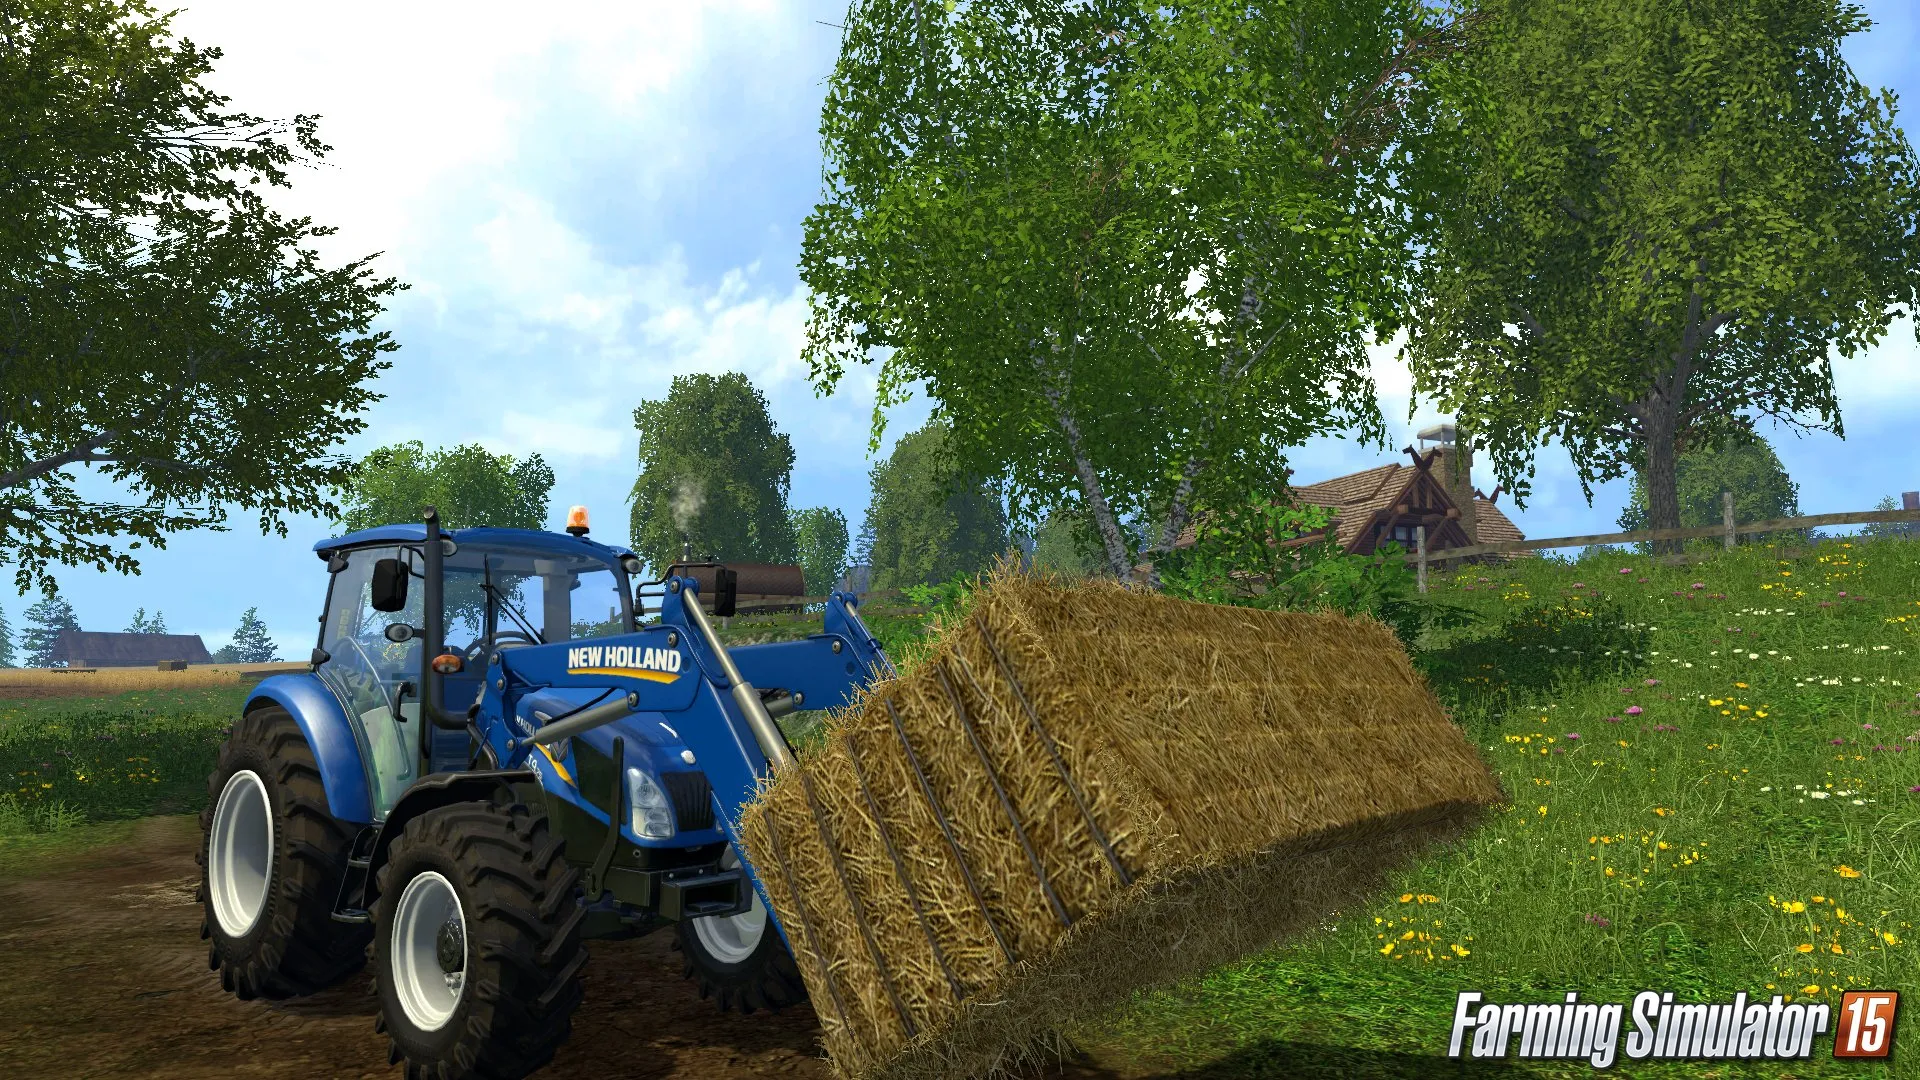 Farming Simulator 15 PS3 Cheats - GameRevolution